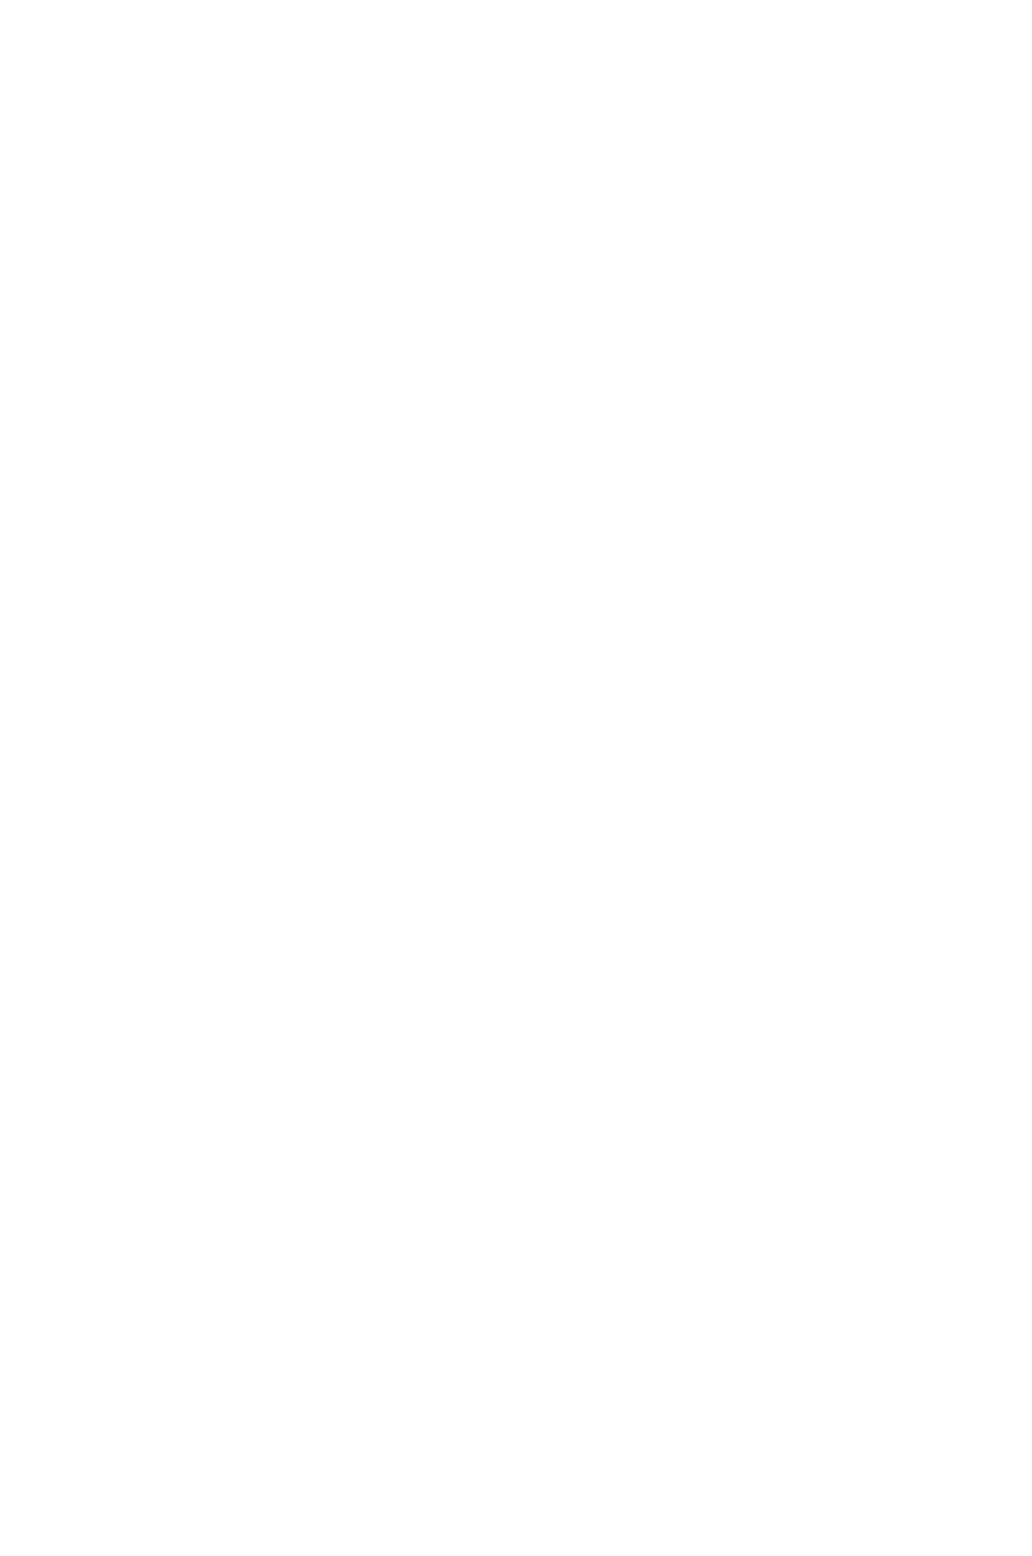 NEUCA logo for dark backgrounds (transparent PNG)